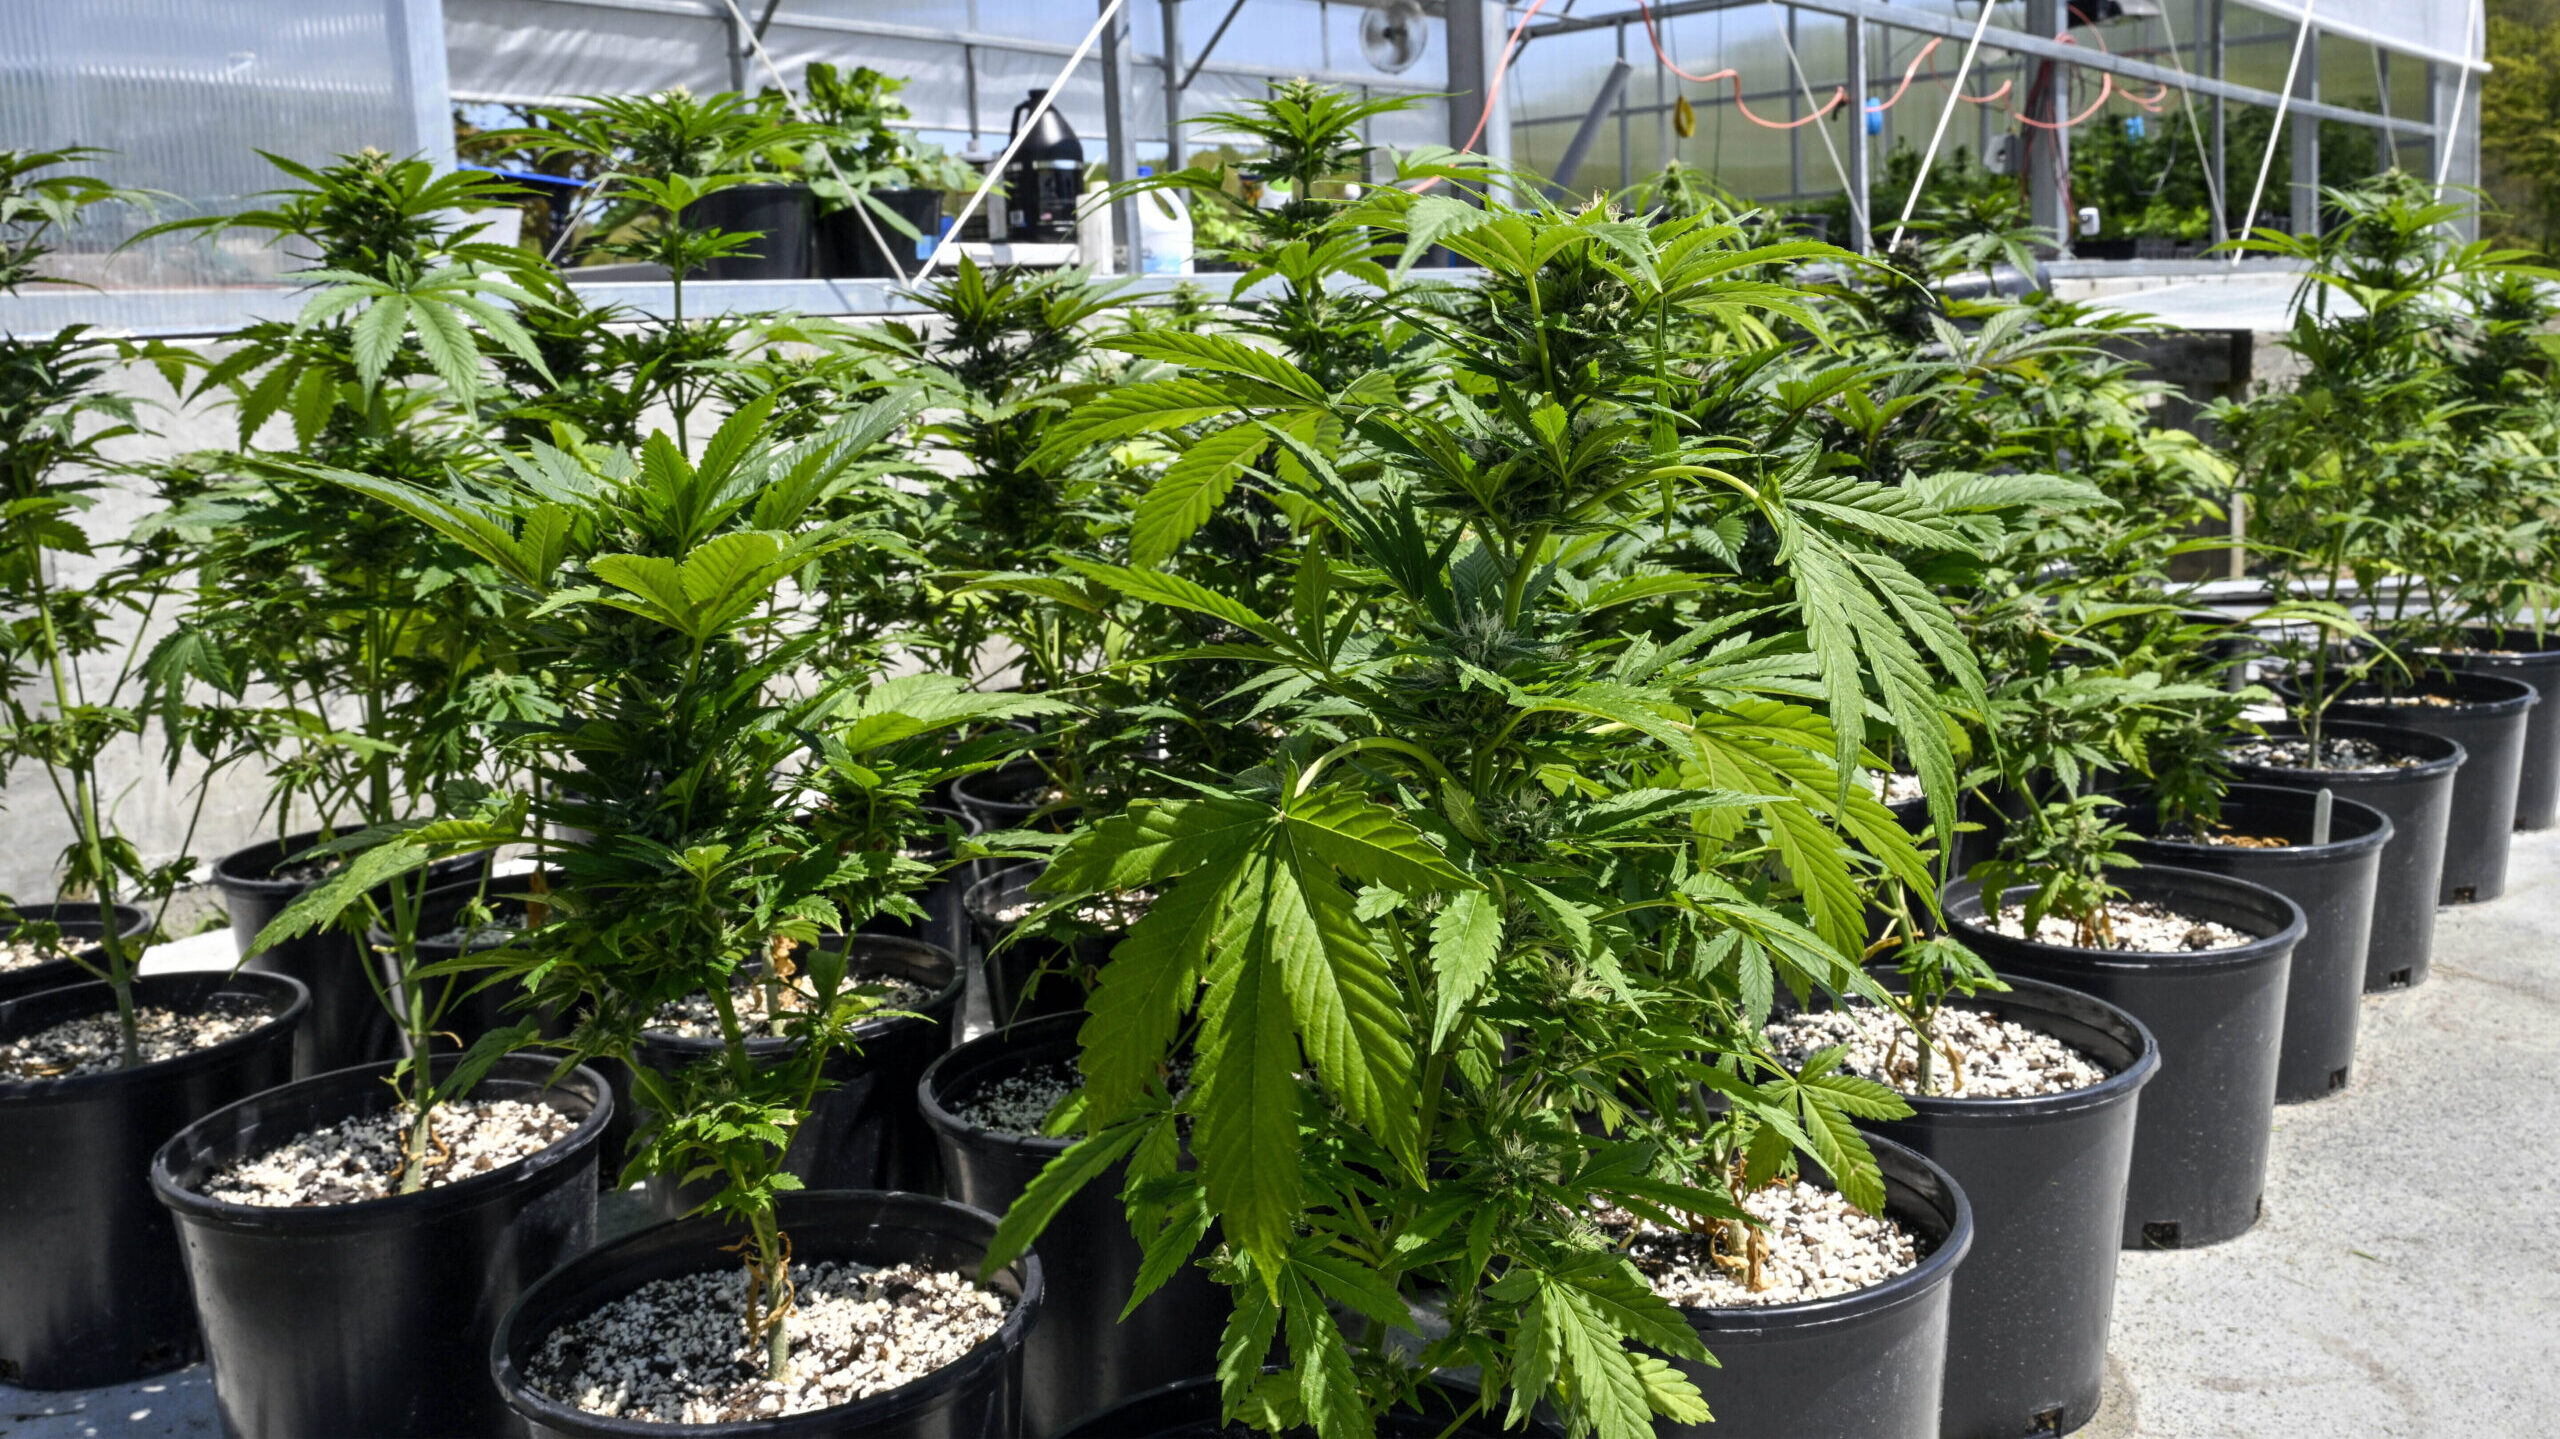 green marijuana plants in black pots...